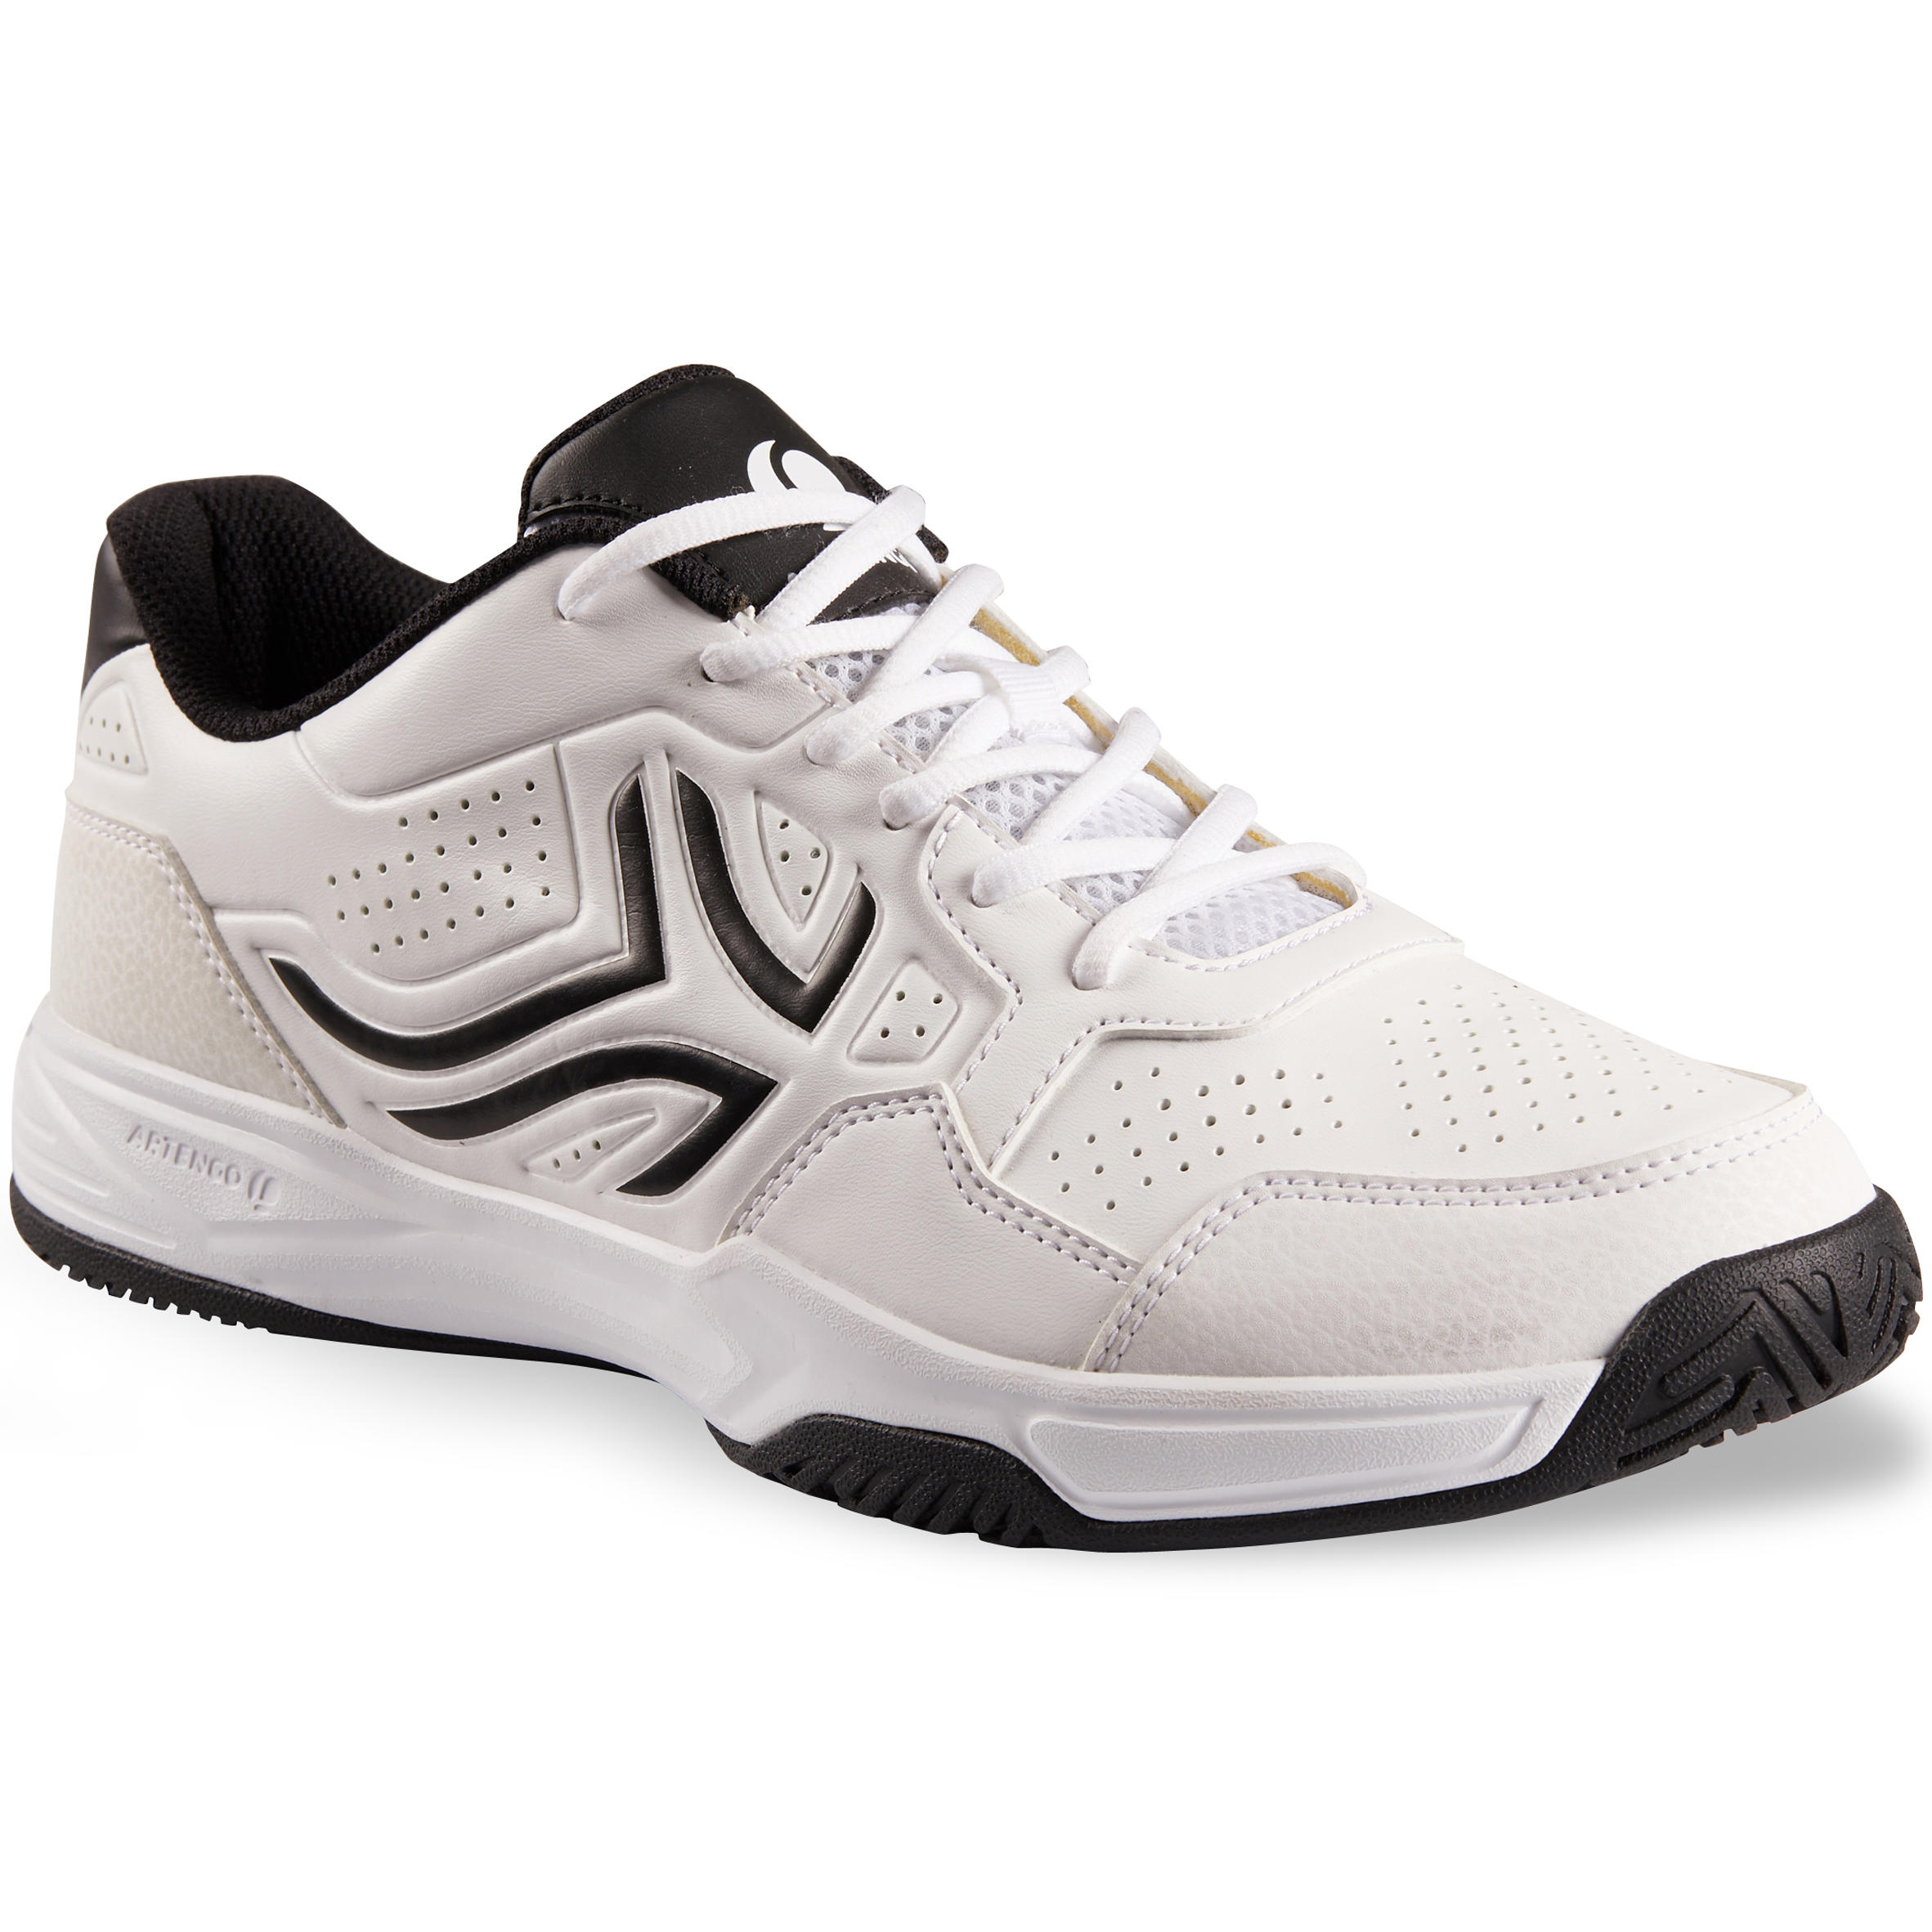 TS190 Multicourt Tennis Shoes - White 